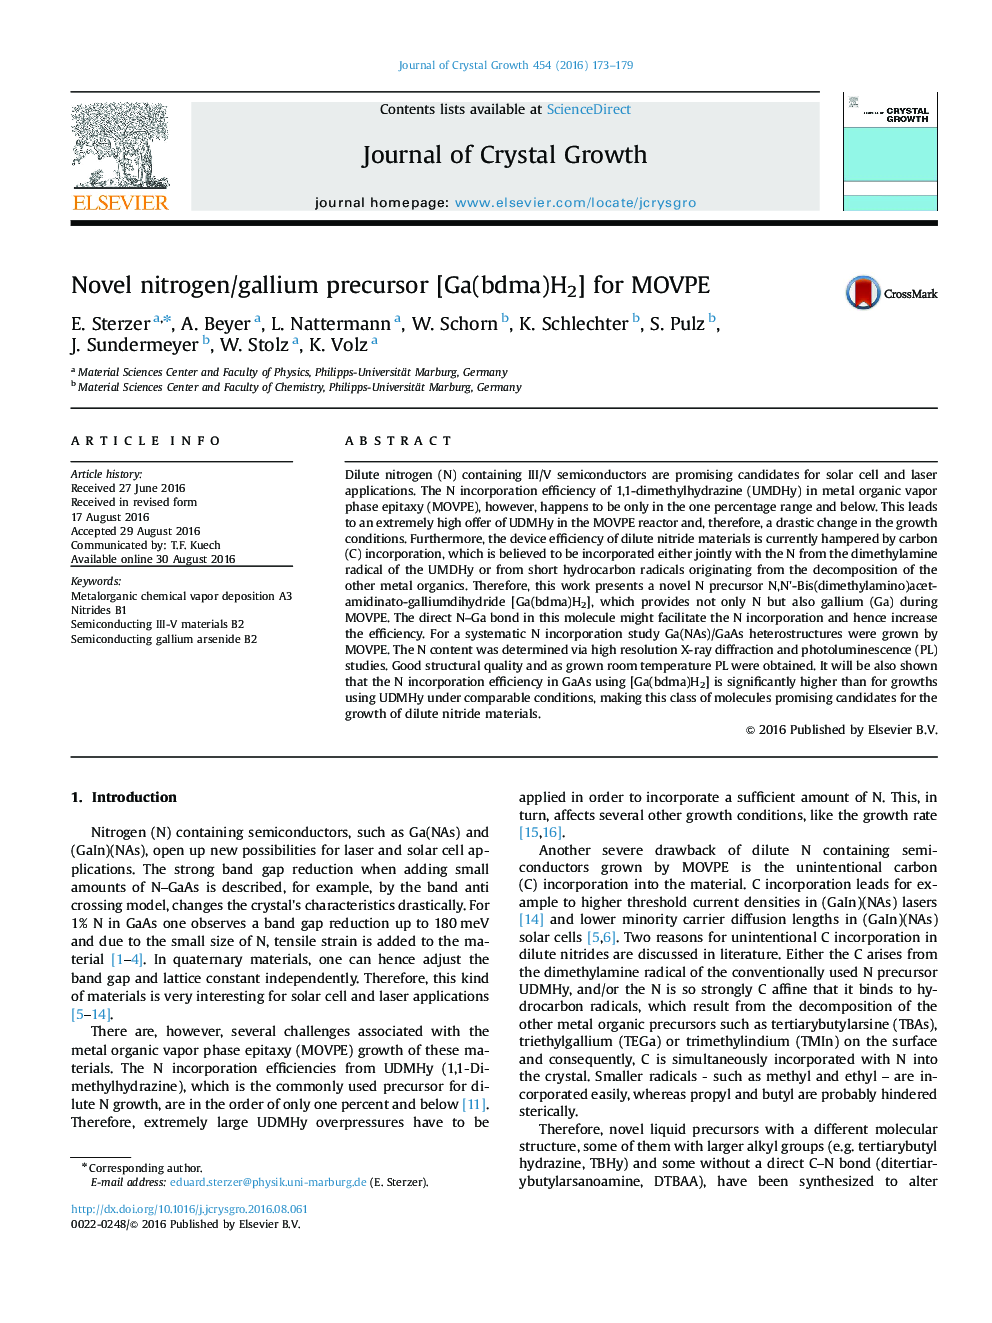 Novel nitrogen/gallium precursor [Ga(bdma)H2] for MOVPE